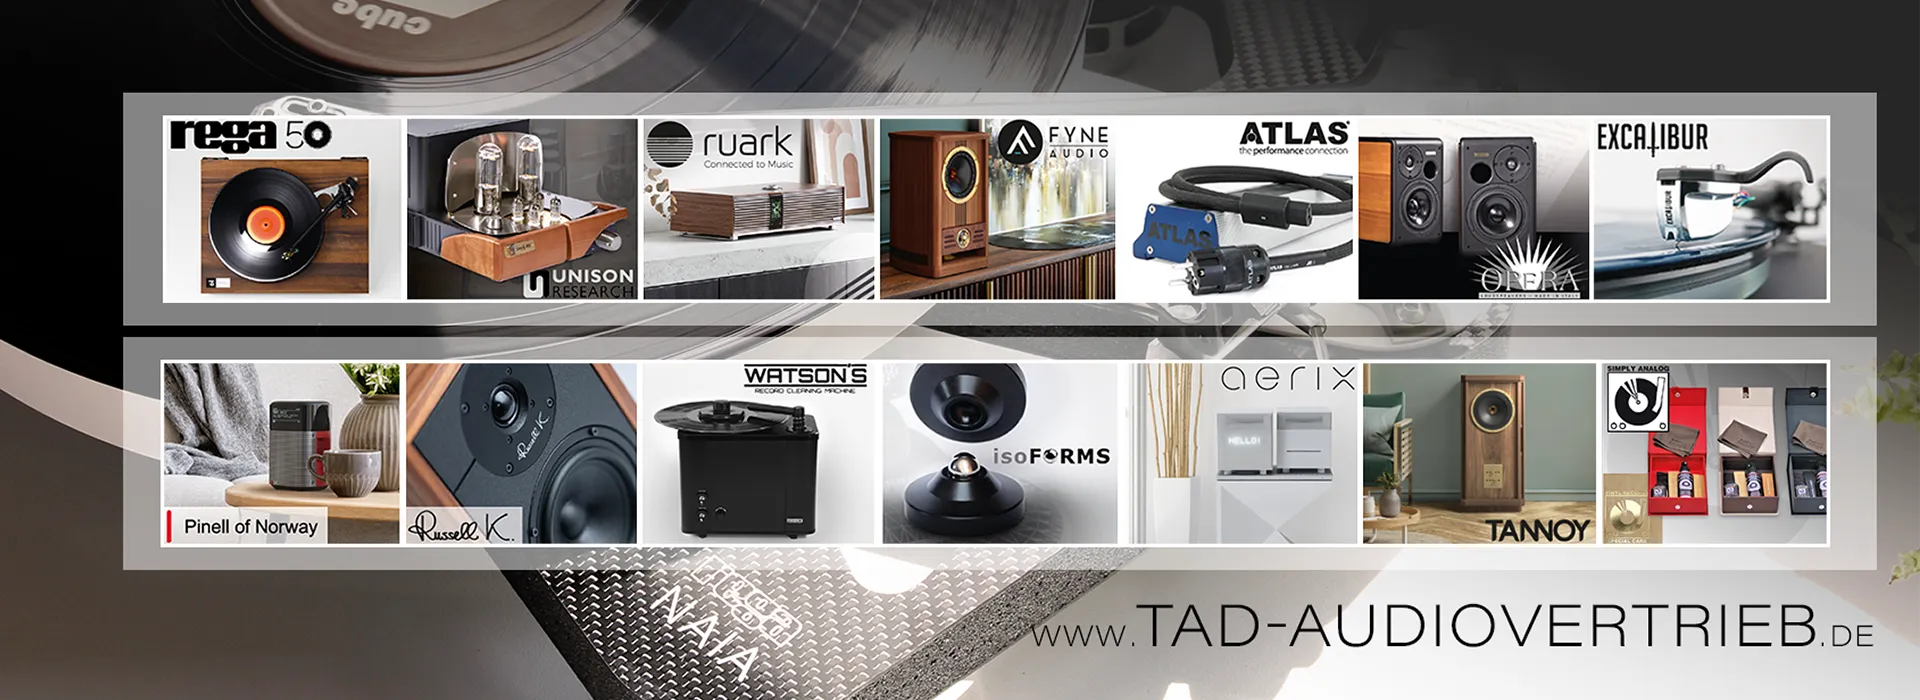 TAD-Audiovertrieb Nov23